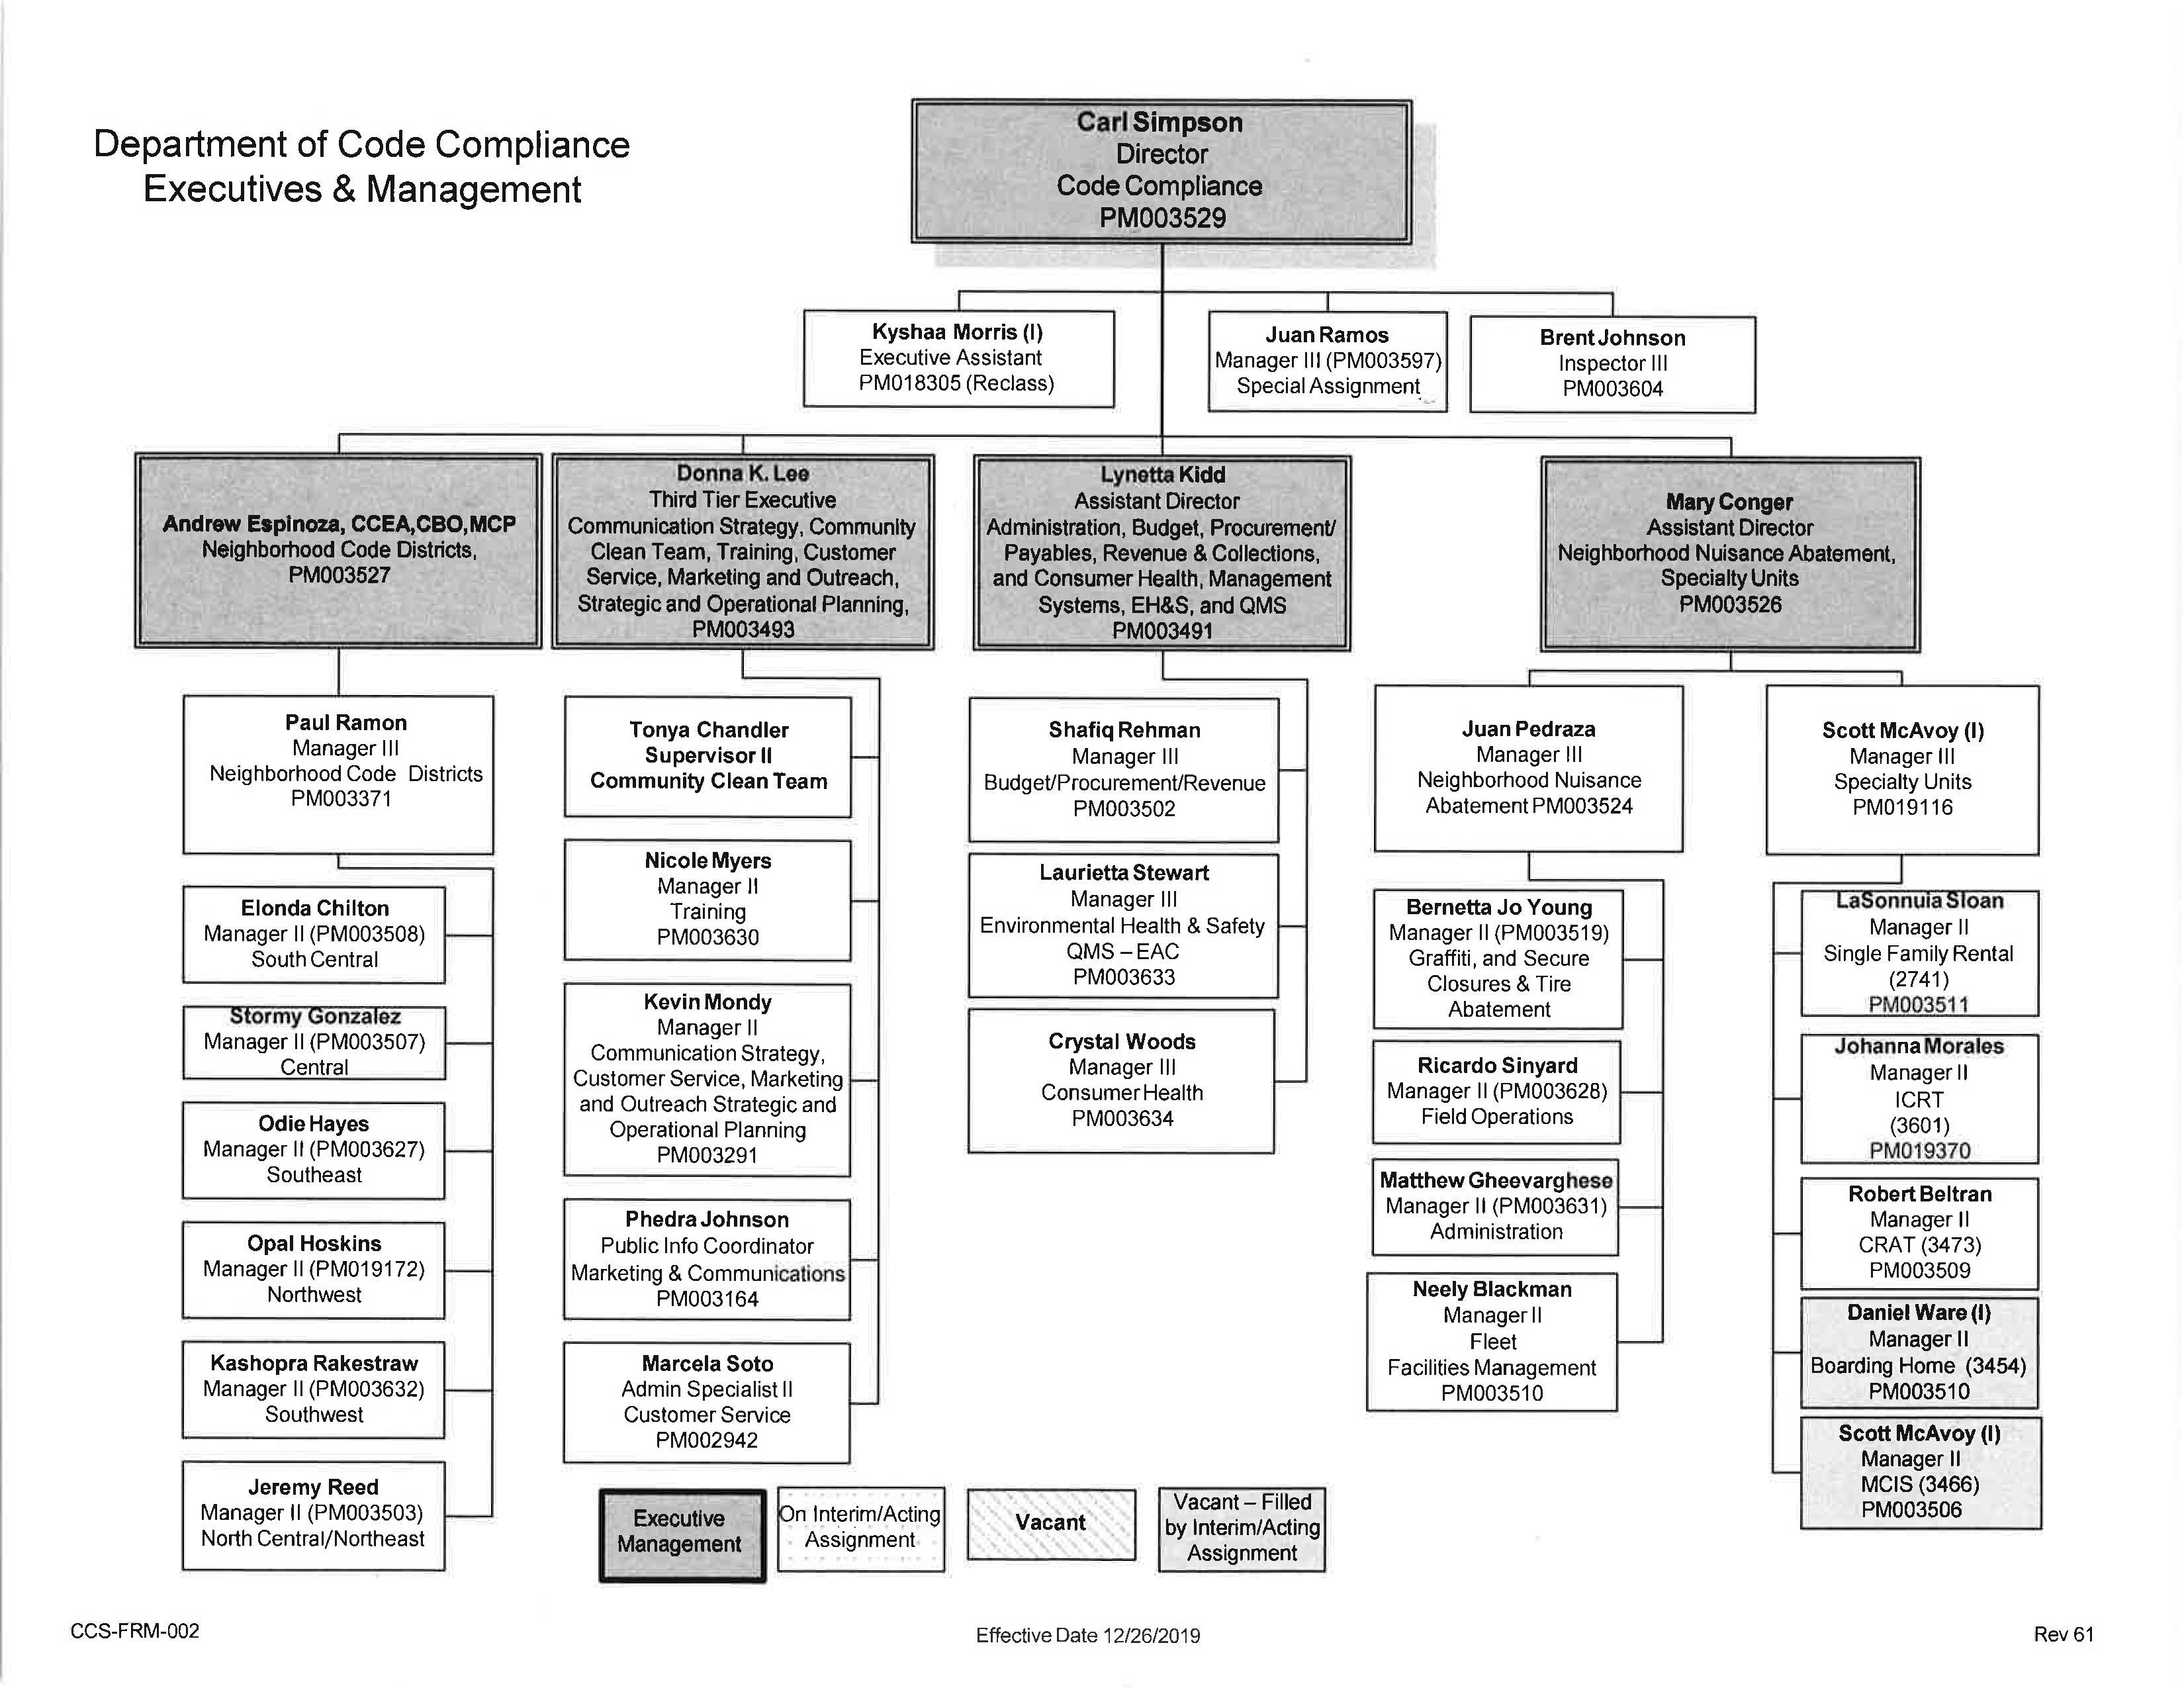 Department of Code Services Organizational Chart.jpg